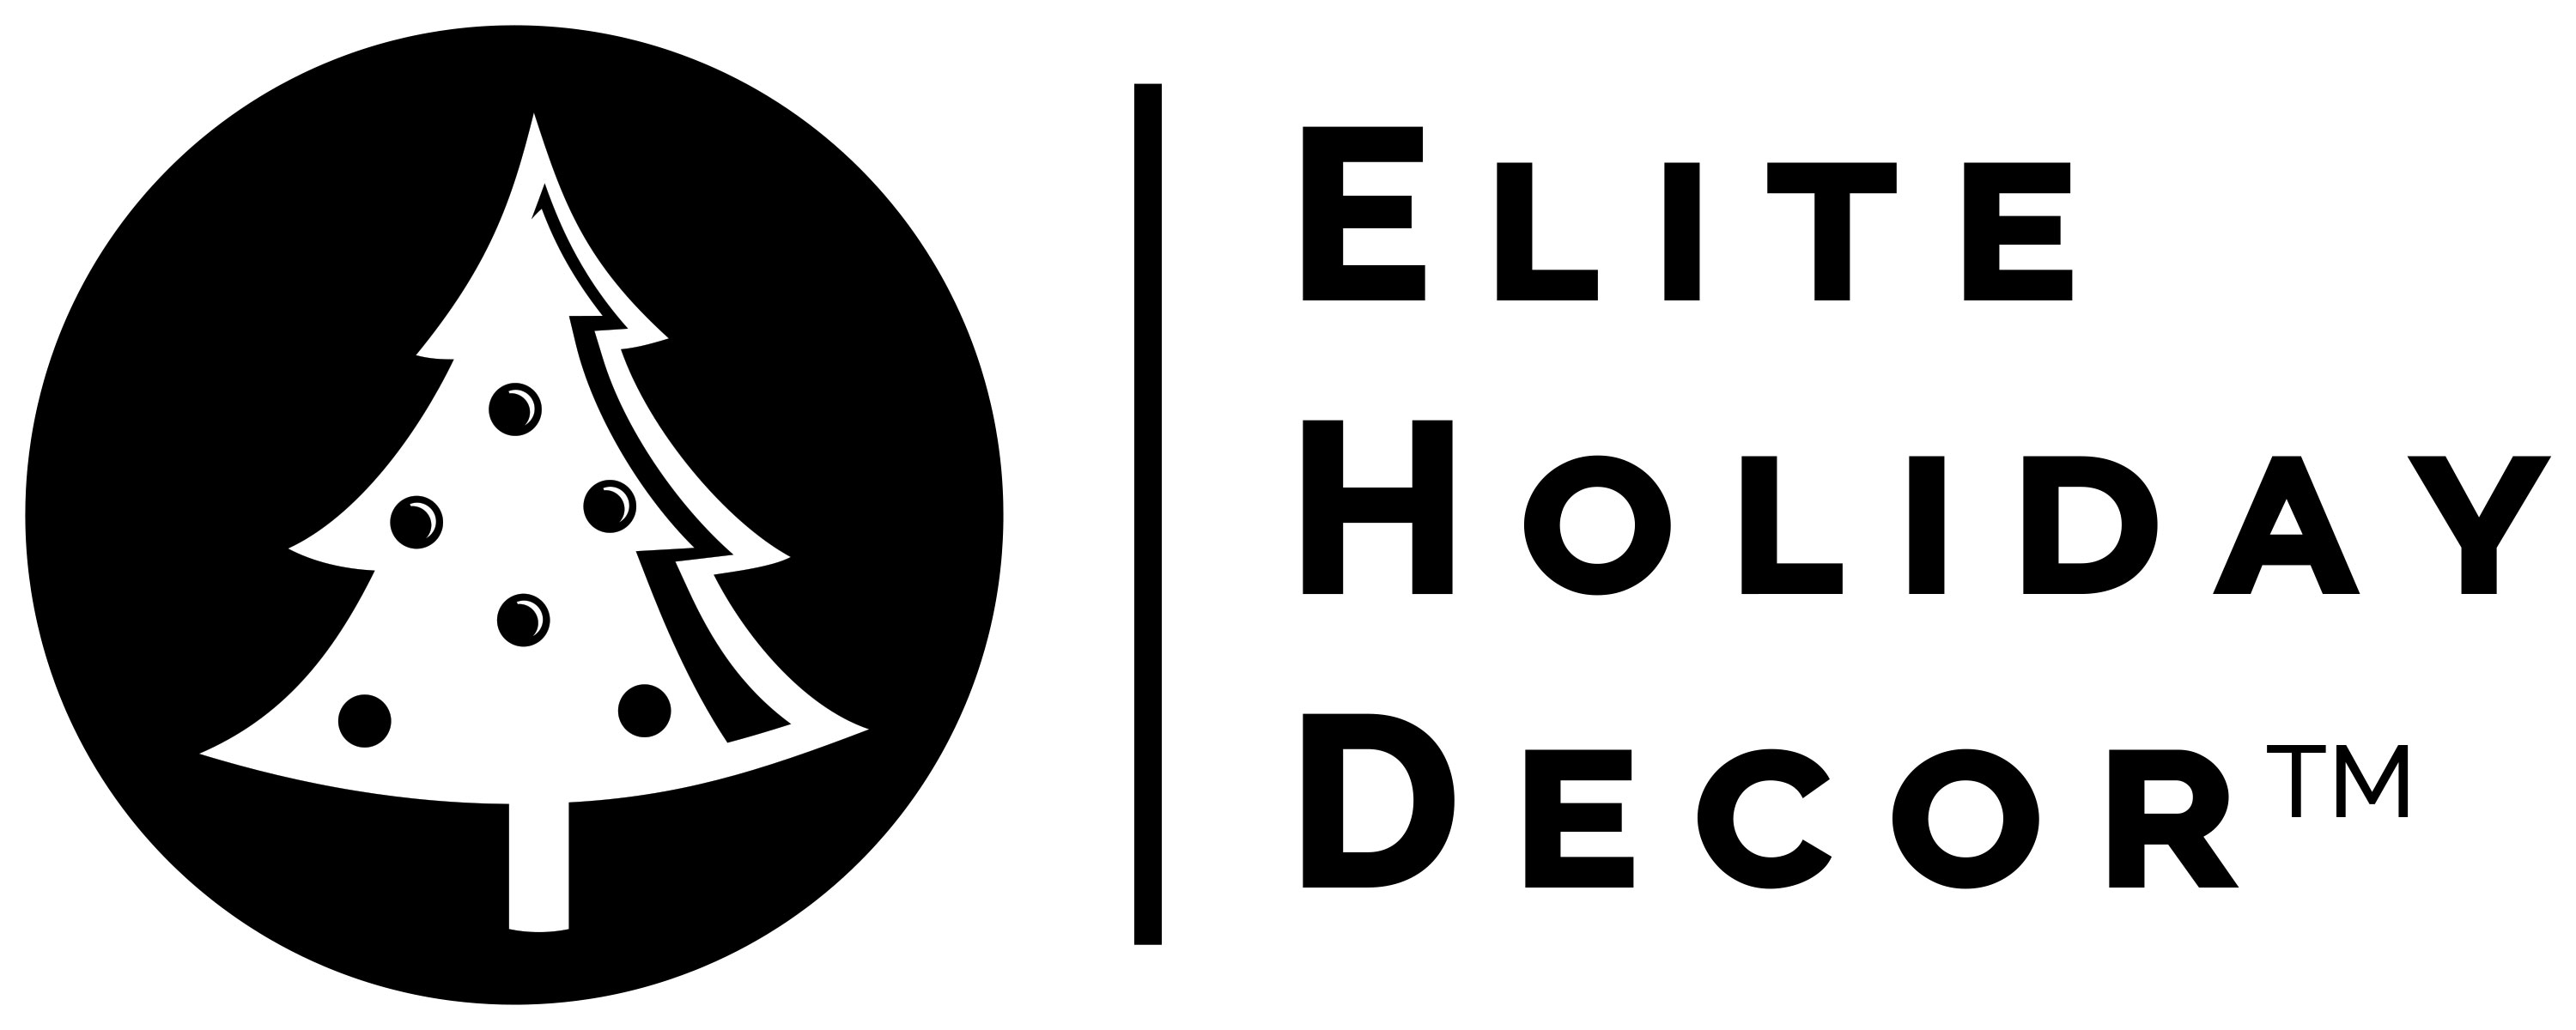 Elite Holiday Decor